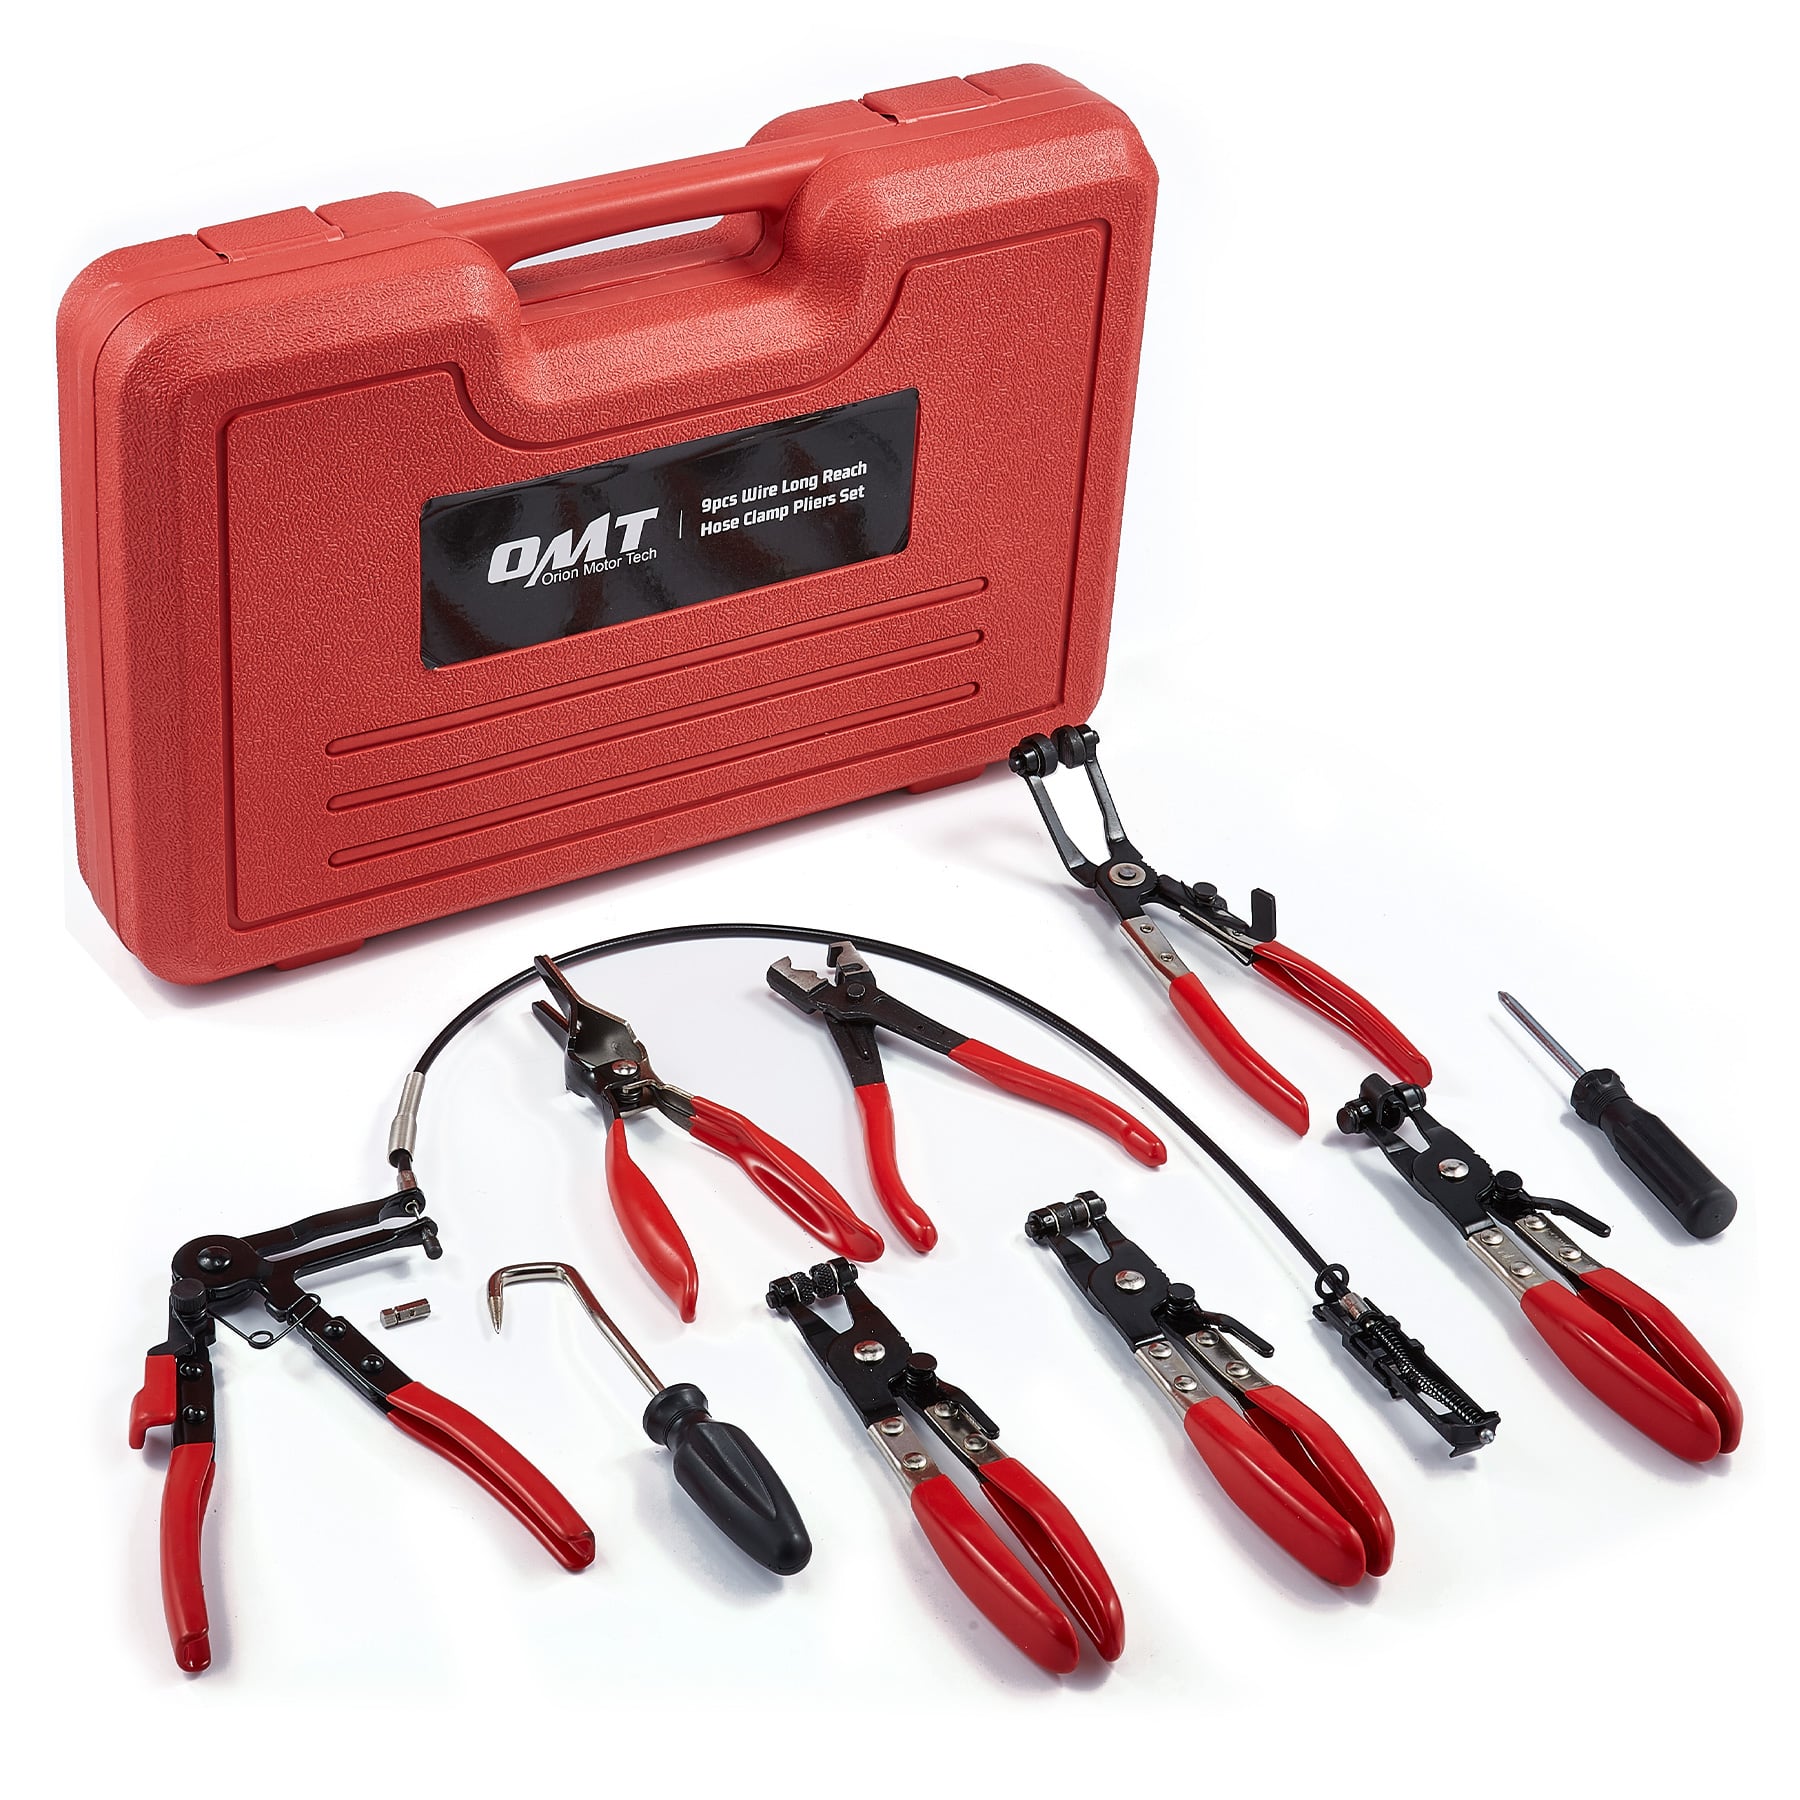 Hose Repair Kit, 9 Piece Long Reach Hose Clamp Pliers Tool Set –  OrionMotorTech